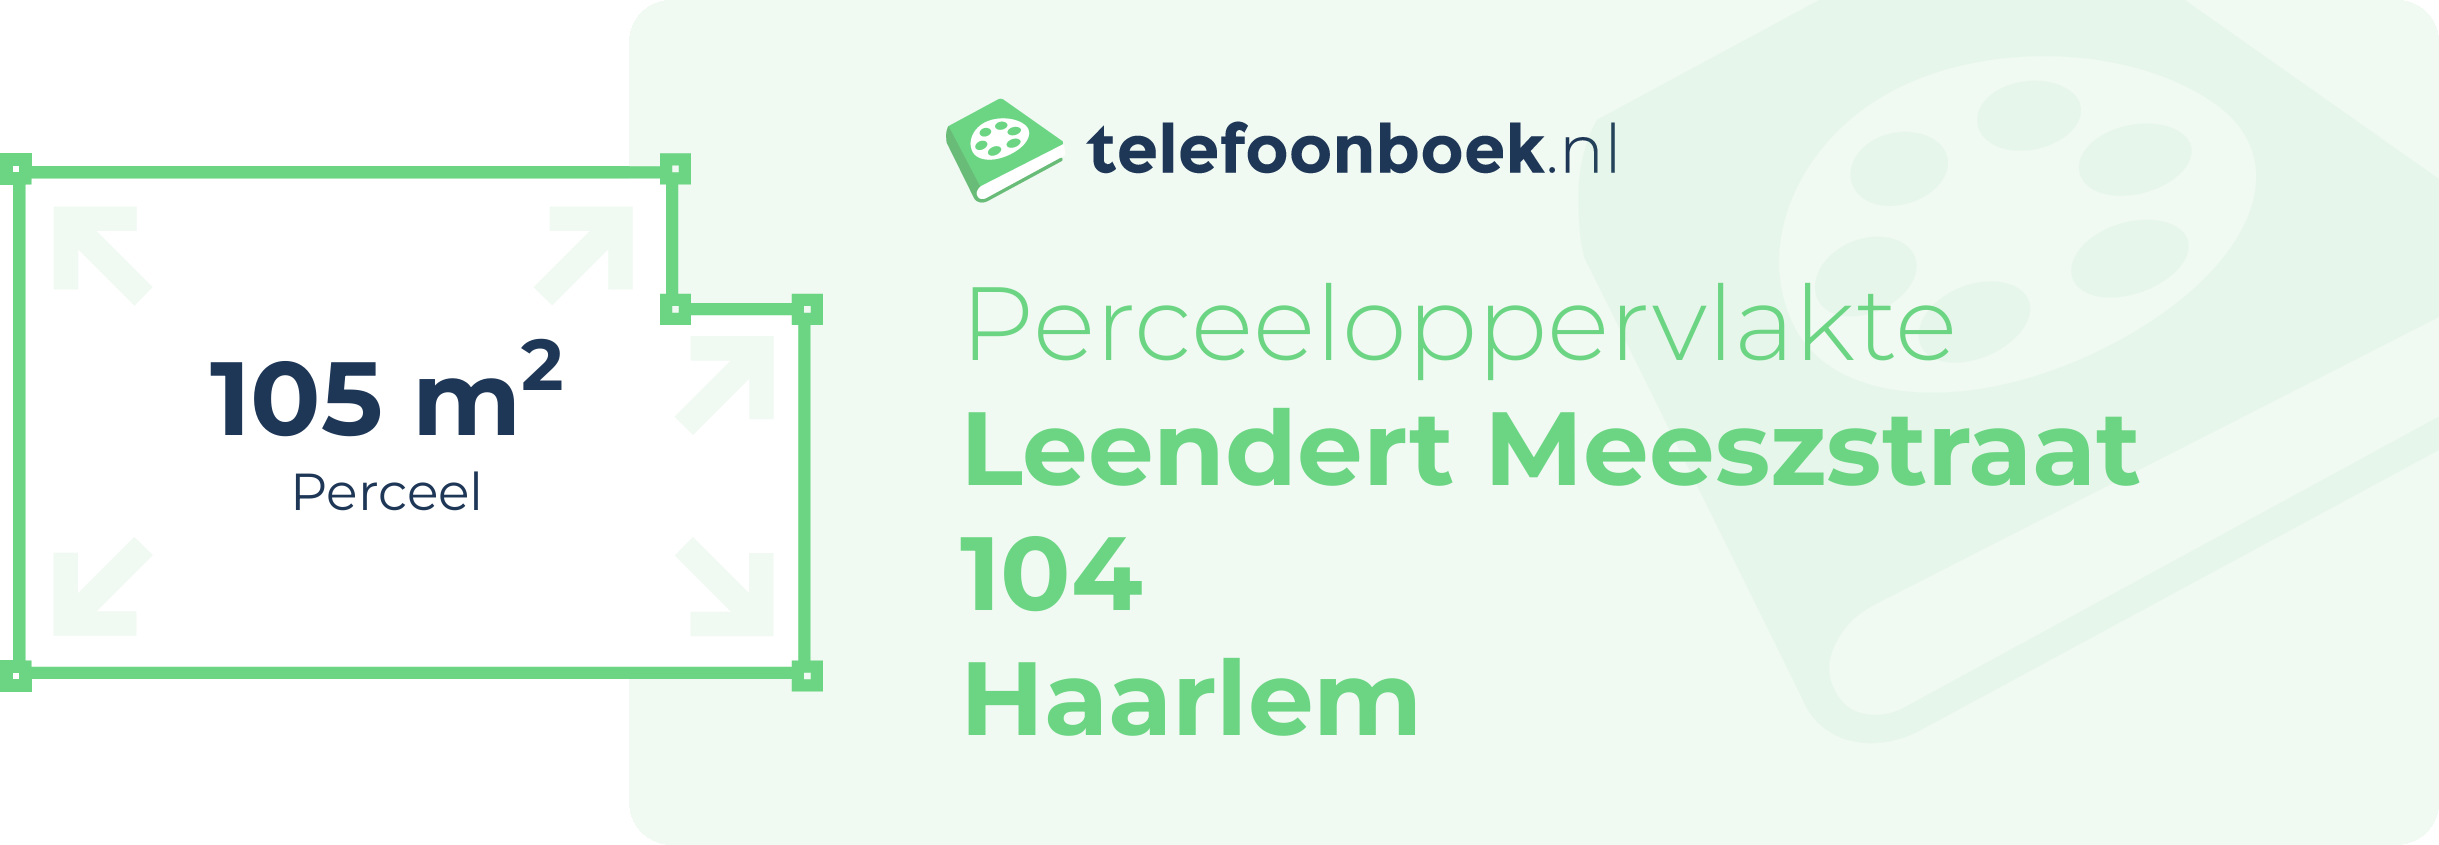 Perceeloppervlakte Leendert Meeszstraat 104 Haarlem